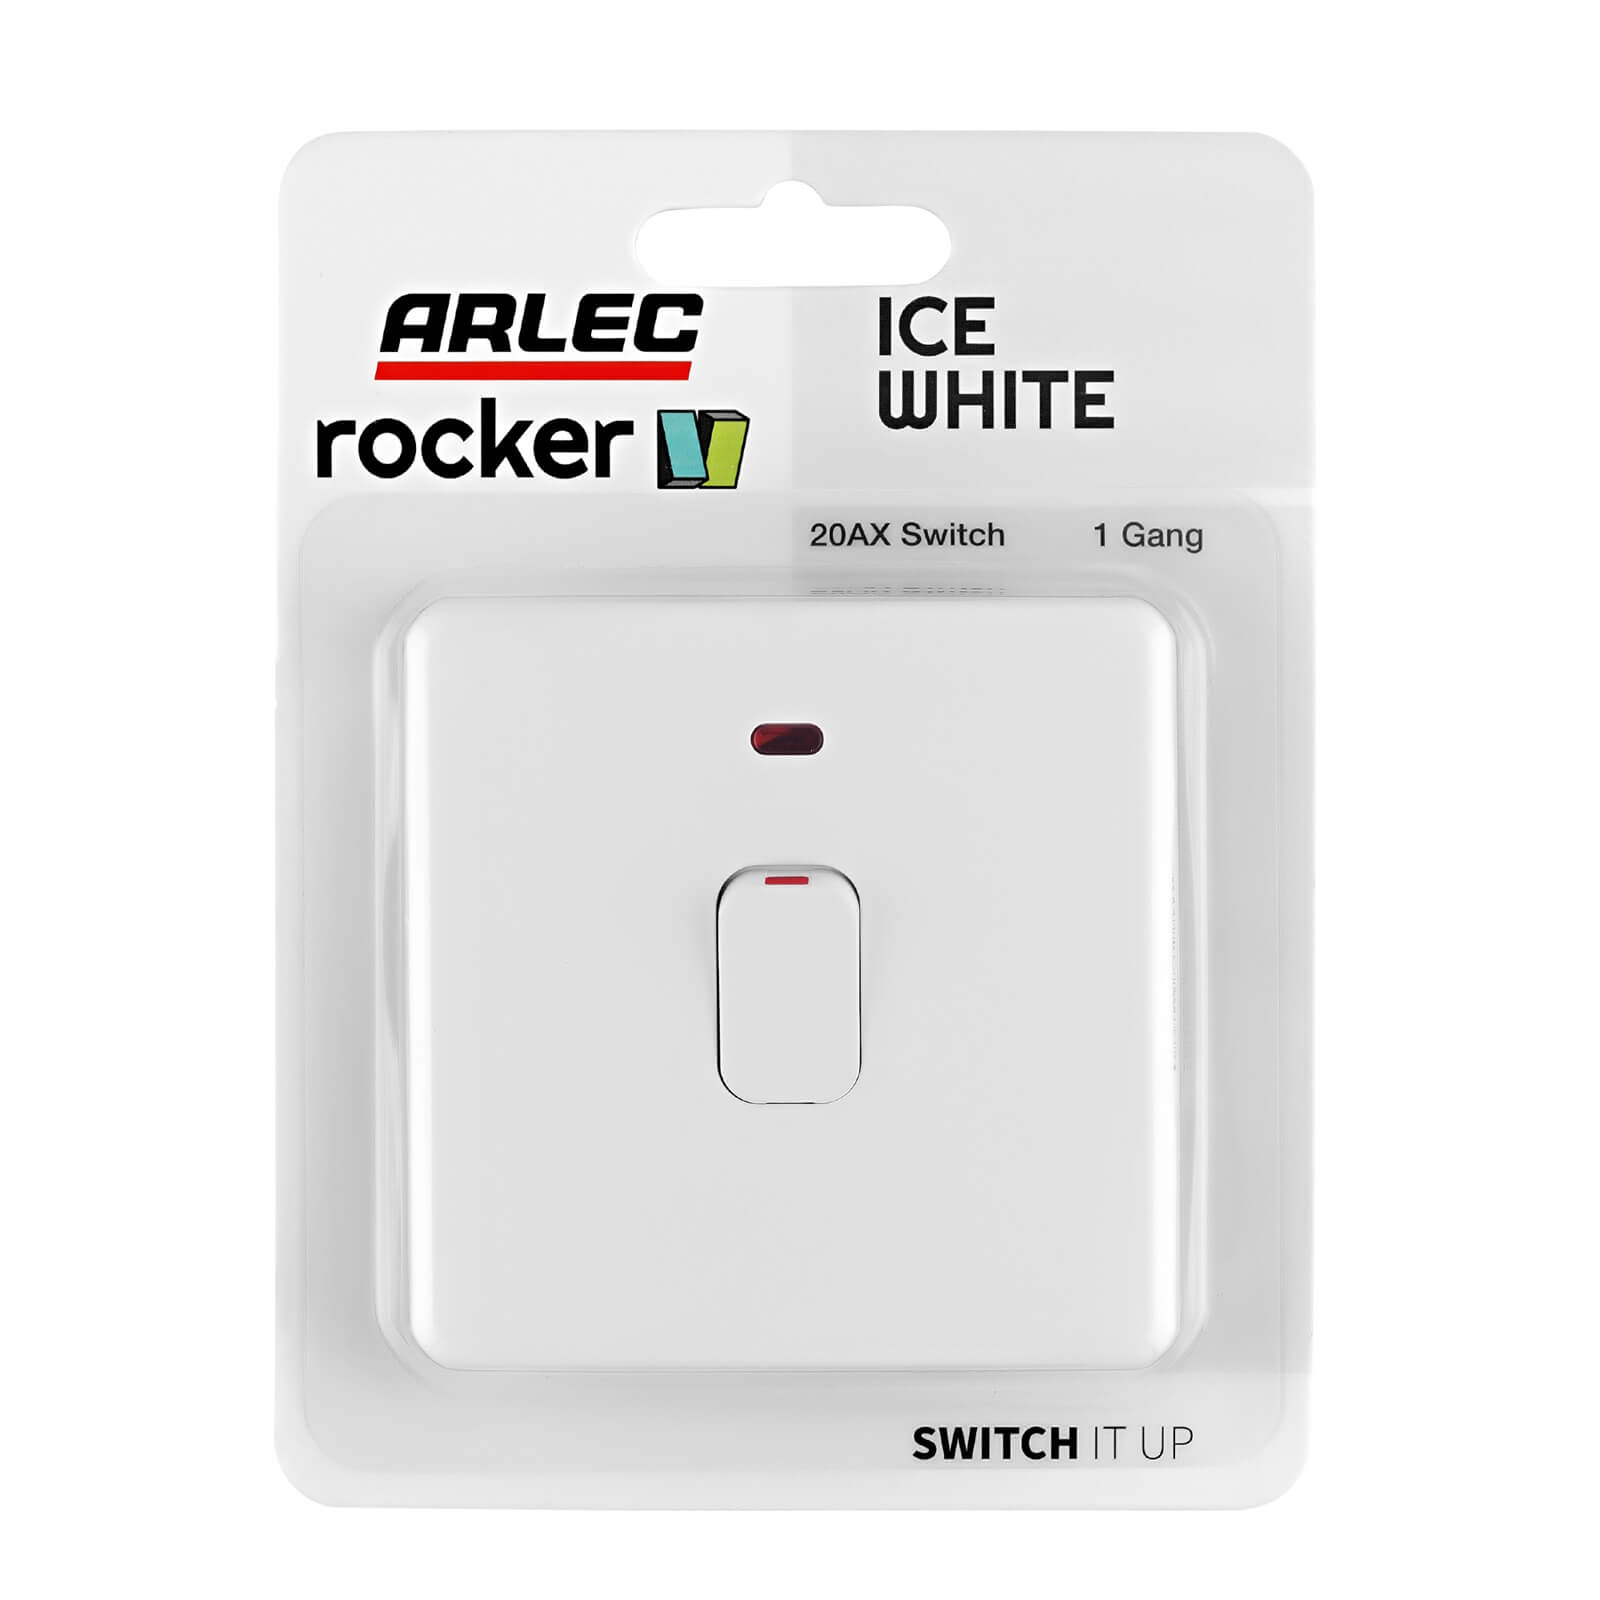 Arlec Rocker 20A 1Gang Double pole Ice White Single switch